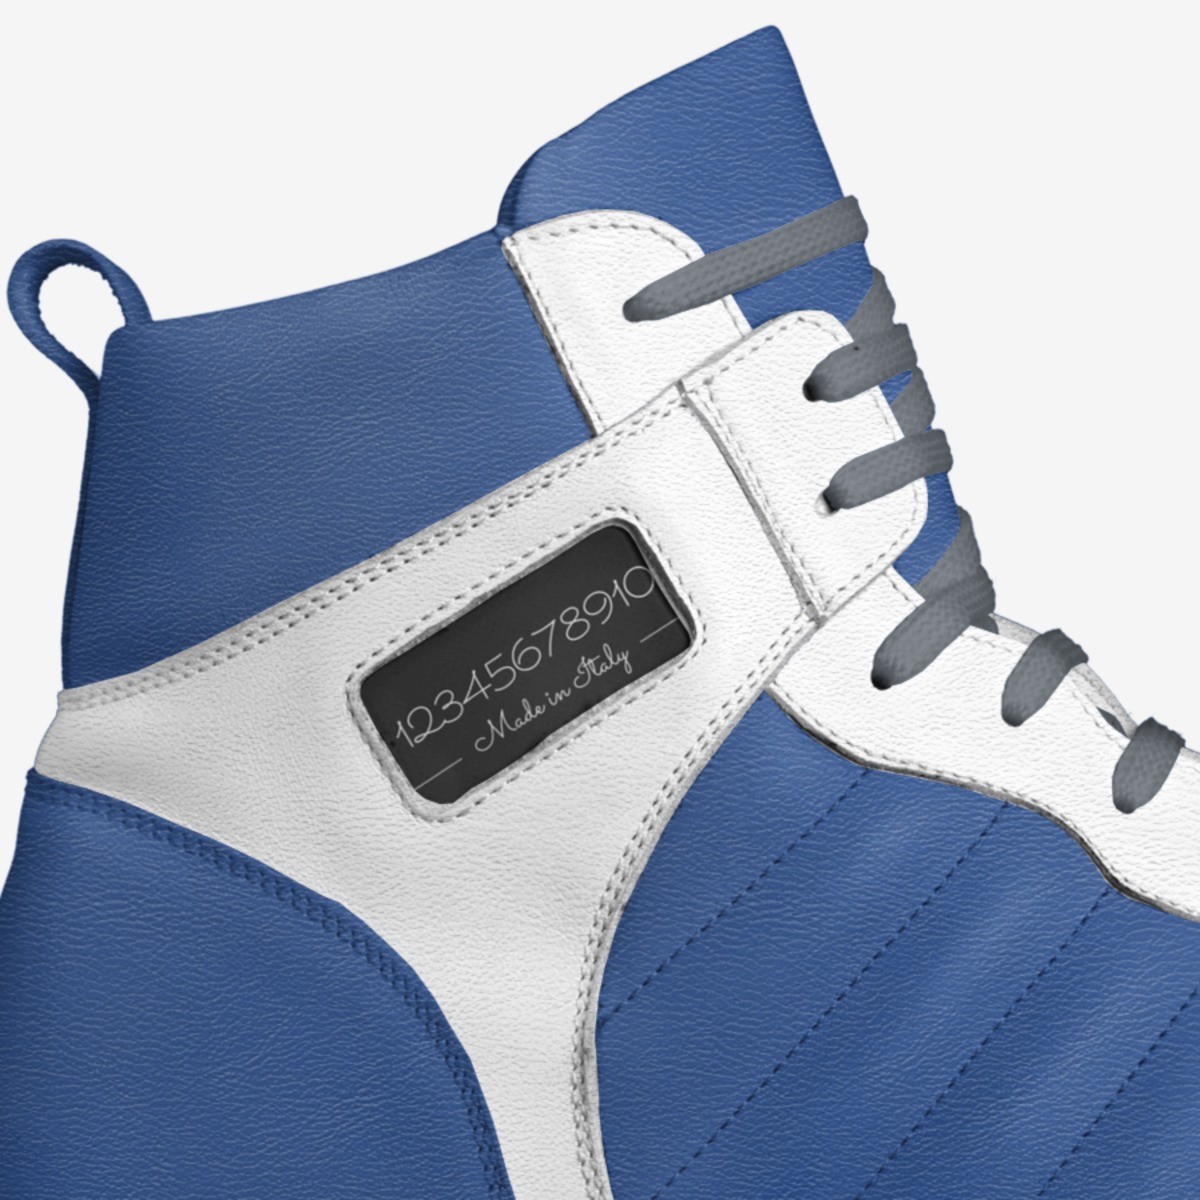 123456789101112131 | A Custom Shoe concept by Braden Haynes